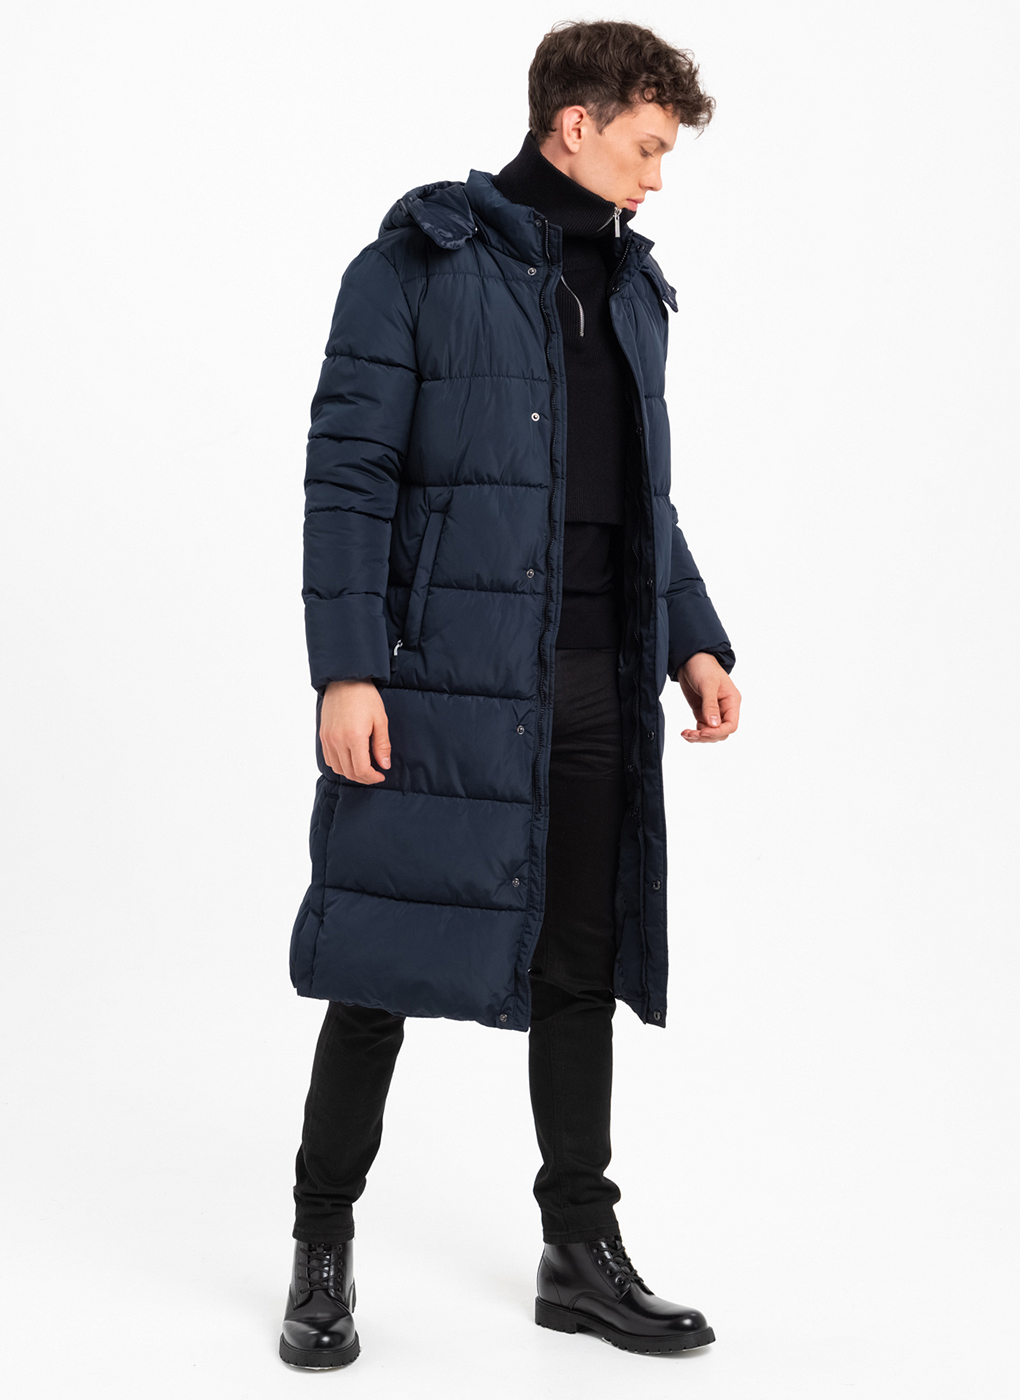 Зимняя куртка мужская Amimoda 65197 синяя 54 RU